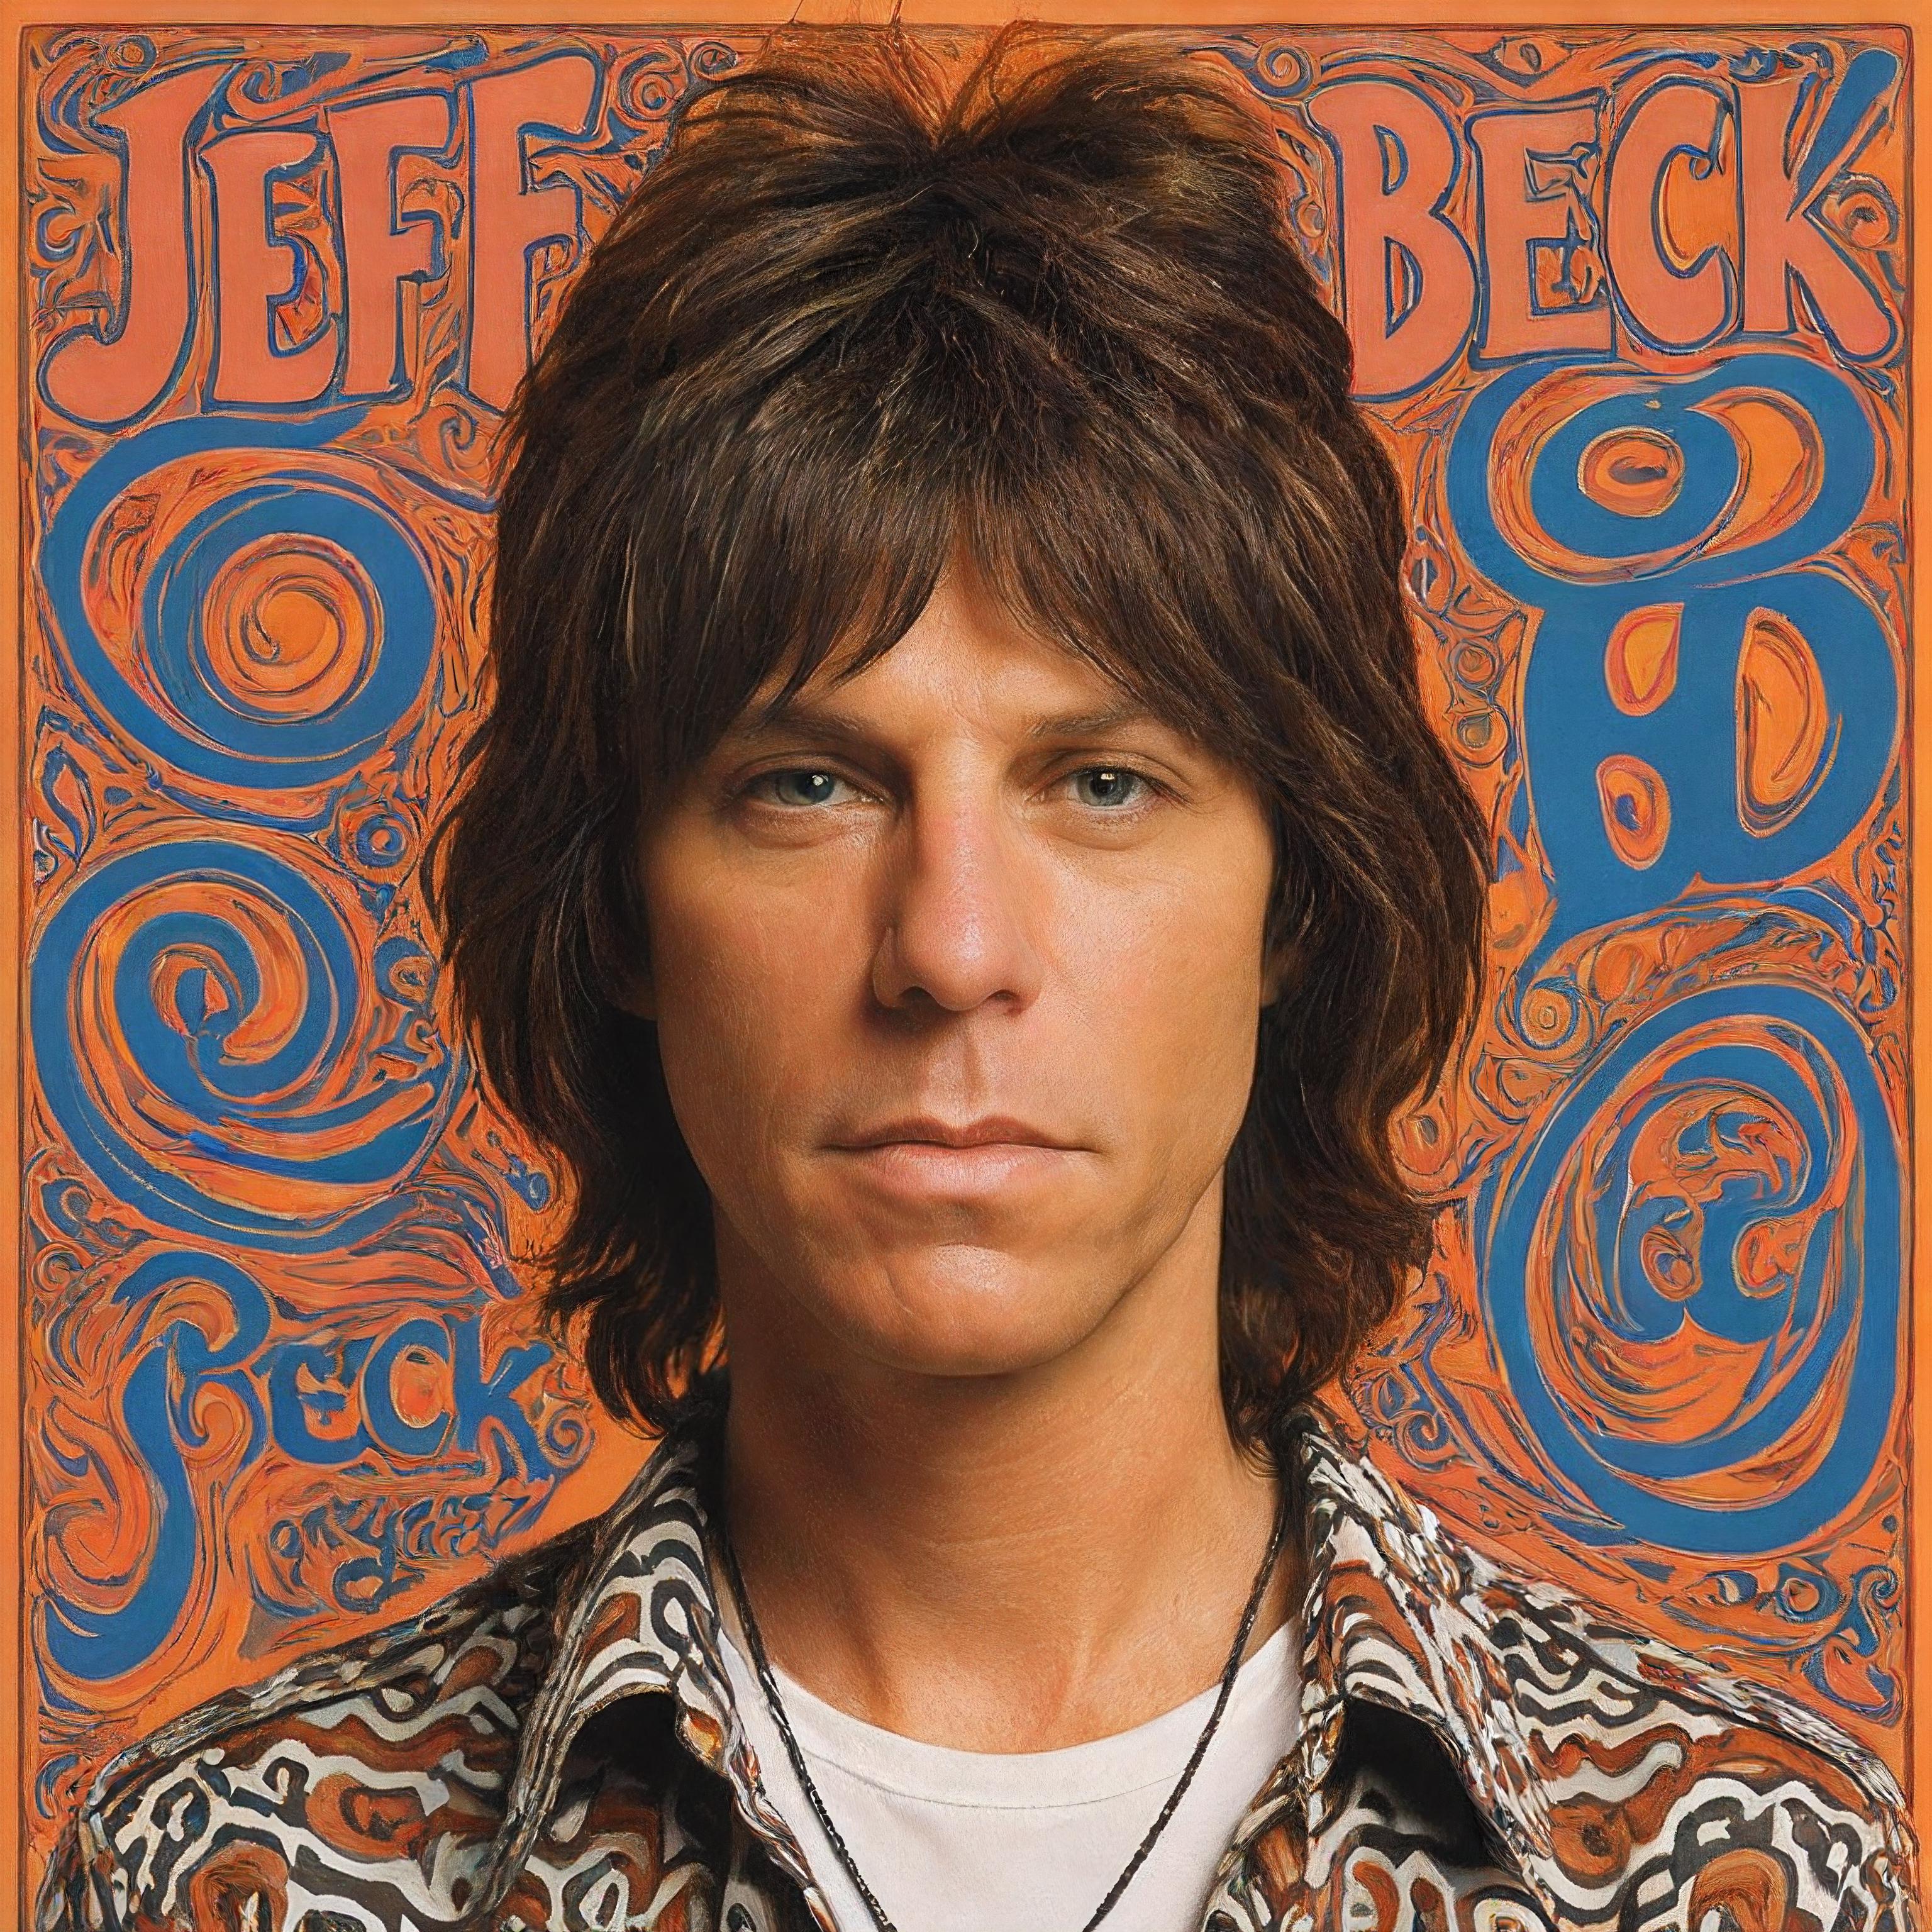 Jeff Beck SDXL image by stratblaster